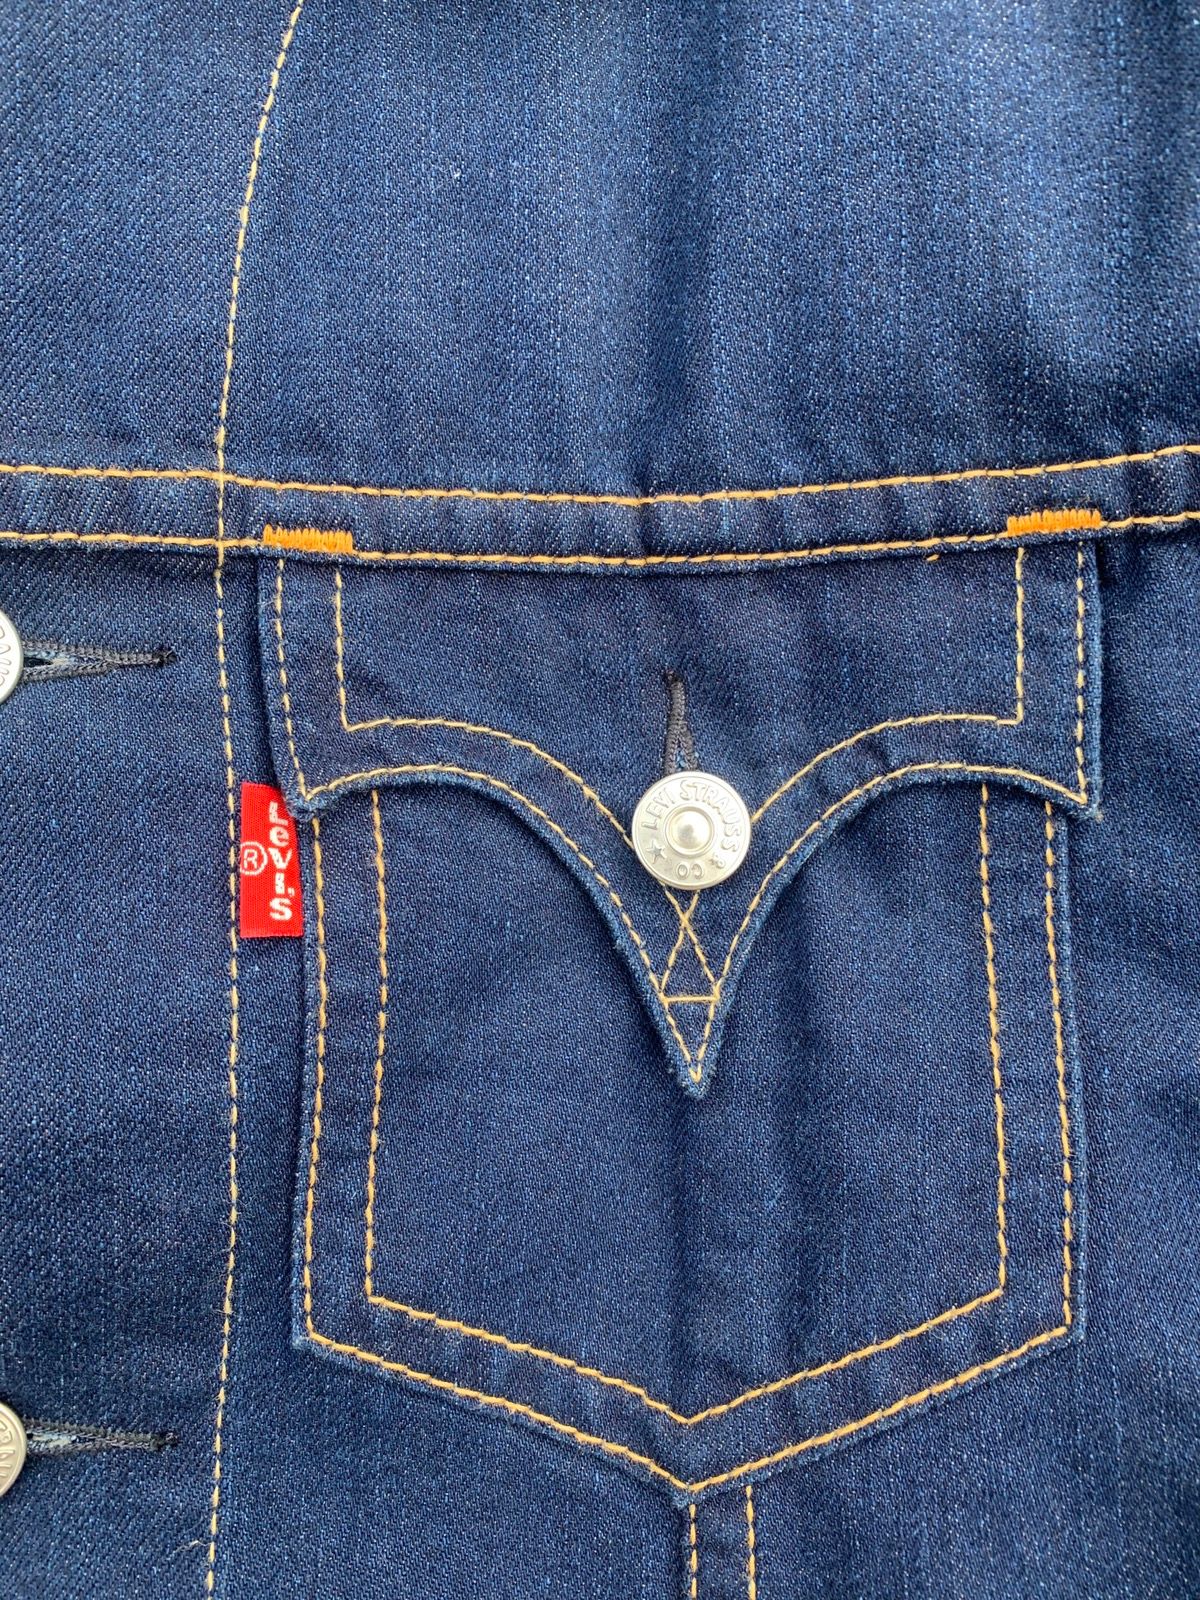 Levi's Vintage Style Levi’s Type 1 Iconic Denim Jean Trucker Jacket Size US L / EU 52-54 / 3 - 3 Thumbnail